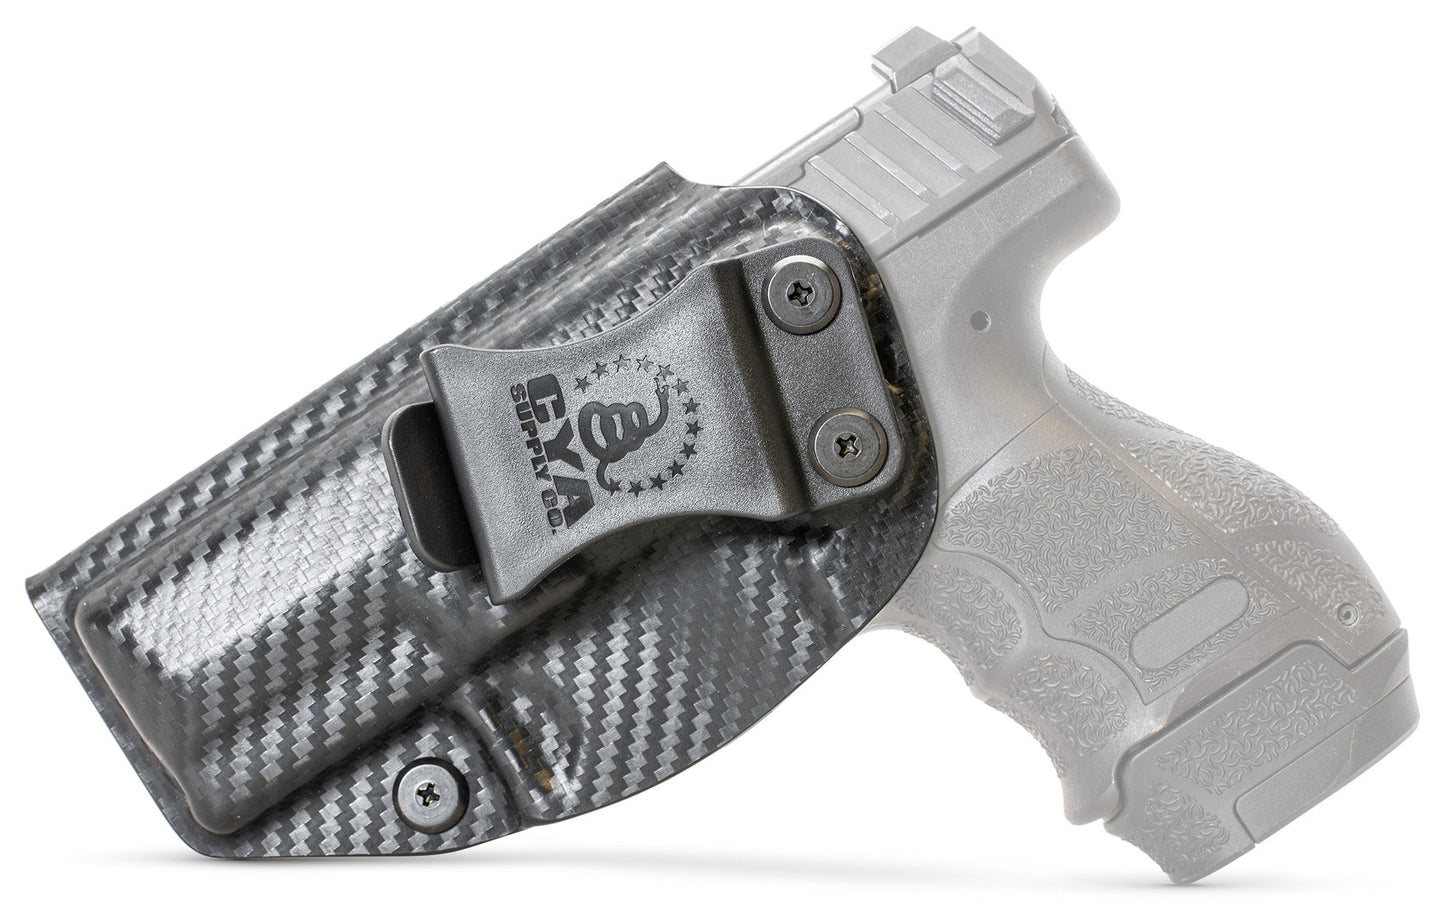 CYA carbon steel Base IWB holster with a black clip on a black hk vp9sk handgun